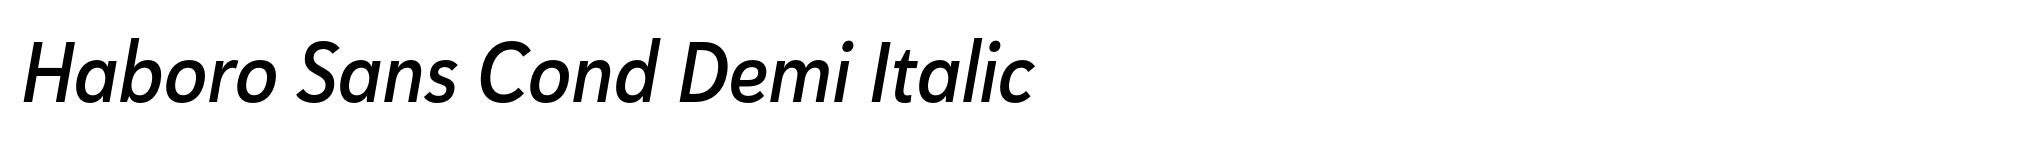 Haboro Sans Cond Demi Italic image